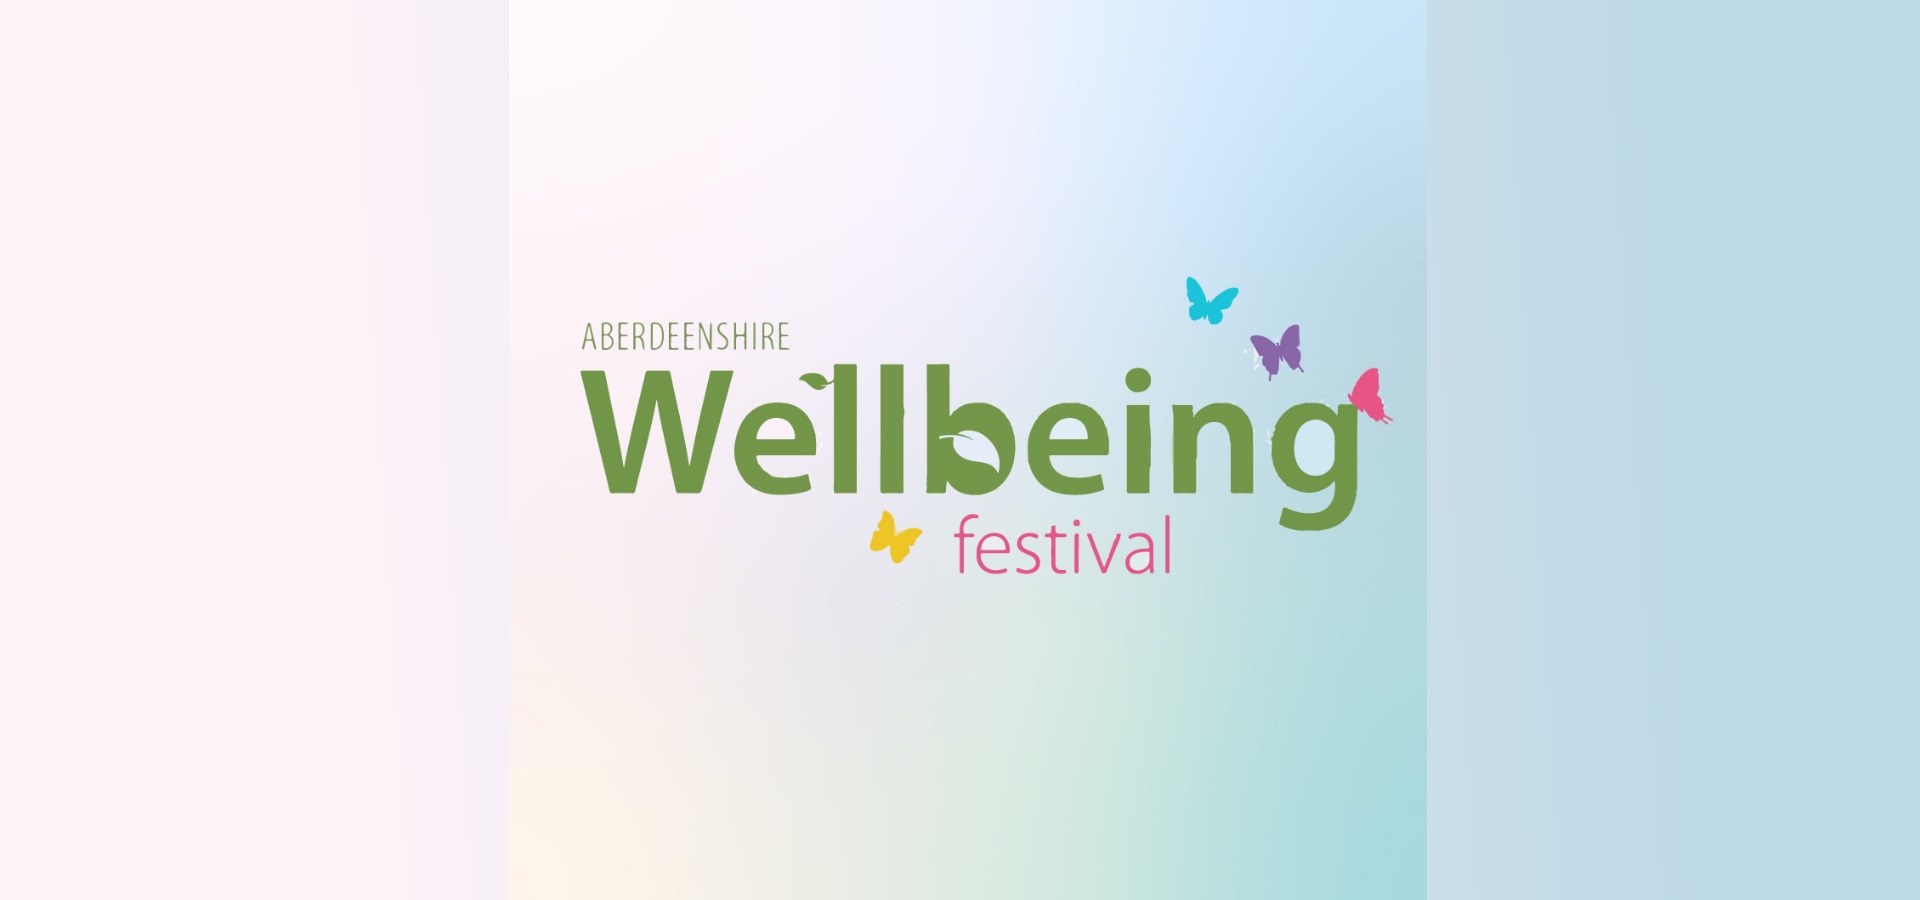 Aberdeenshire Wellbeing Festival